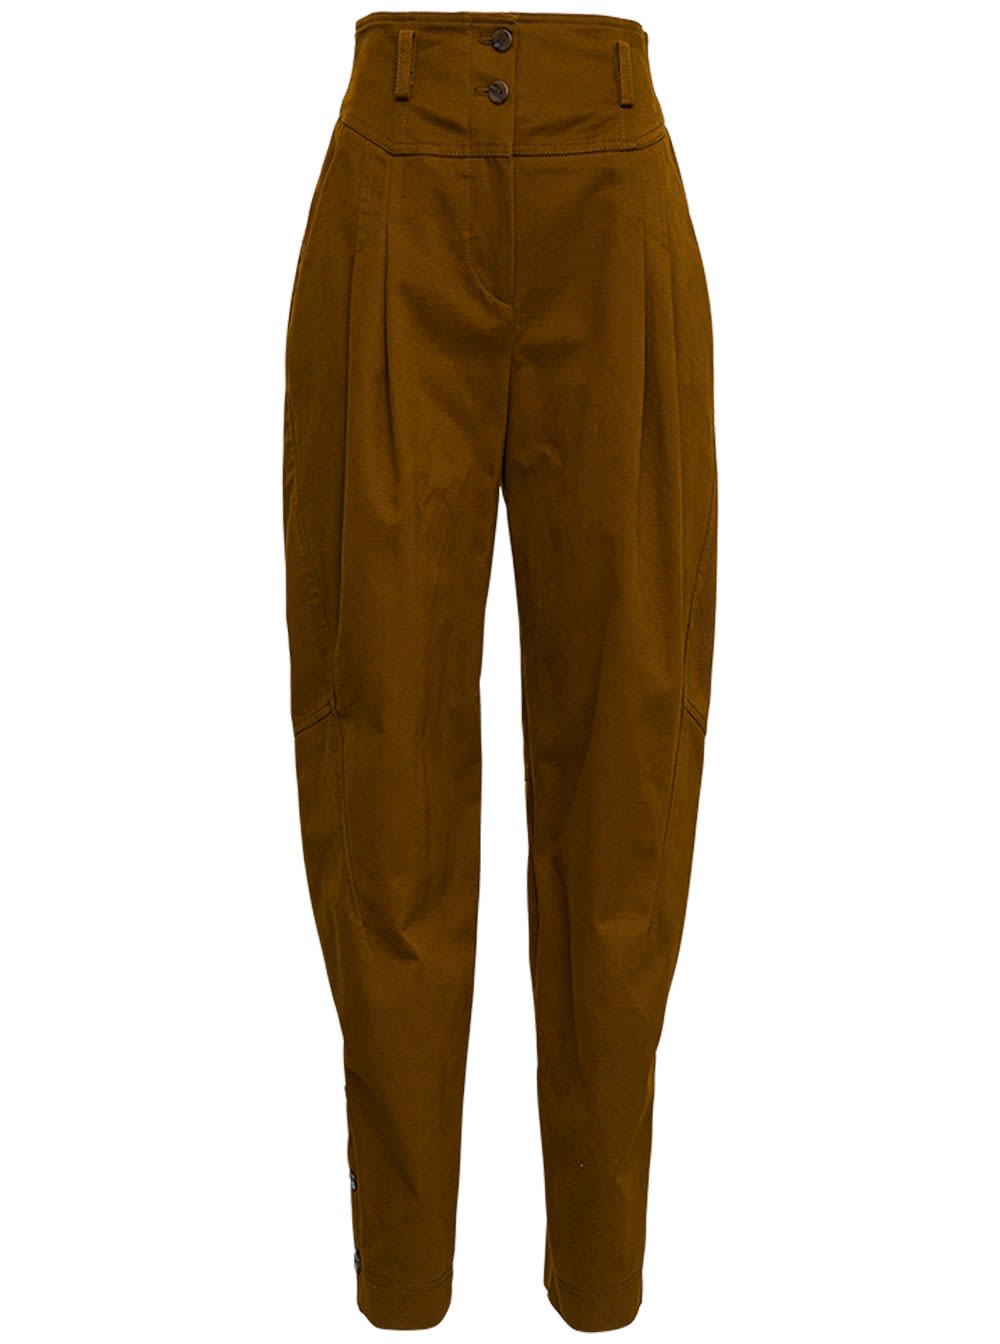 Alberta Ferretti High Waisted Brown Cotton Pants